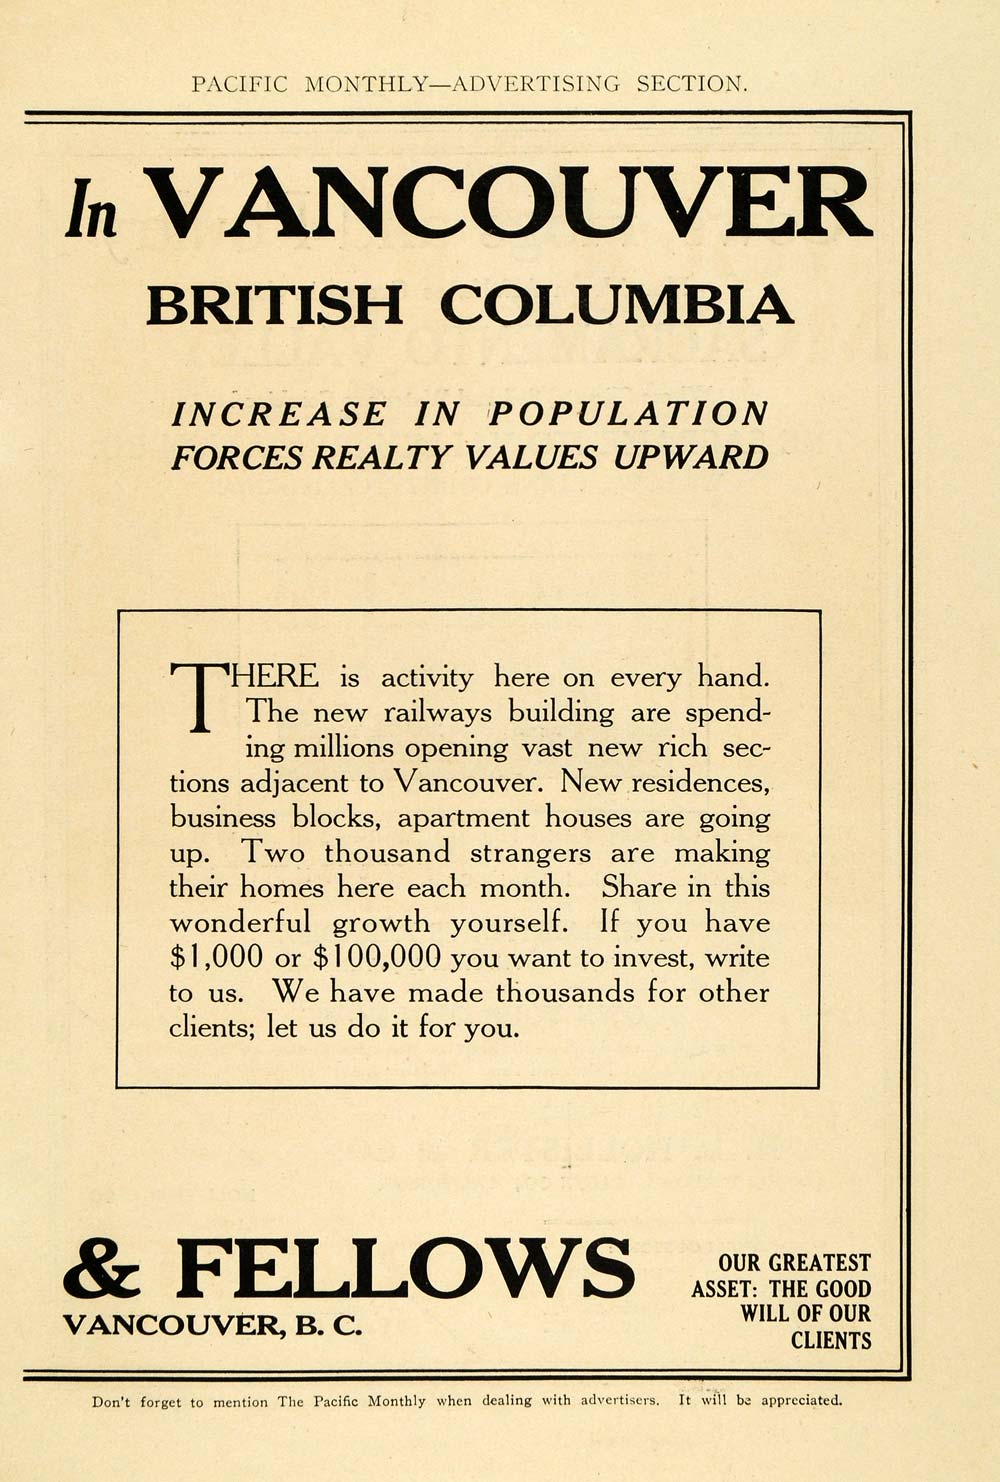 1911 Ad Marriott Fellows Vancouver Hastings Canada - ORIGINAL ADVERTISING PM2